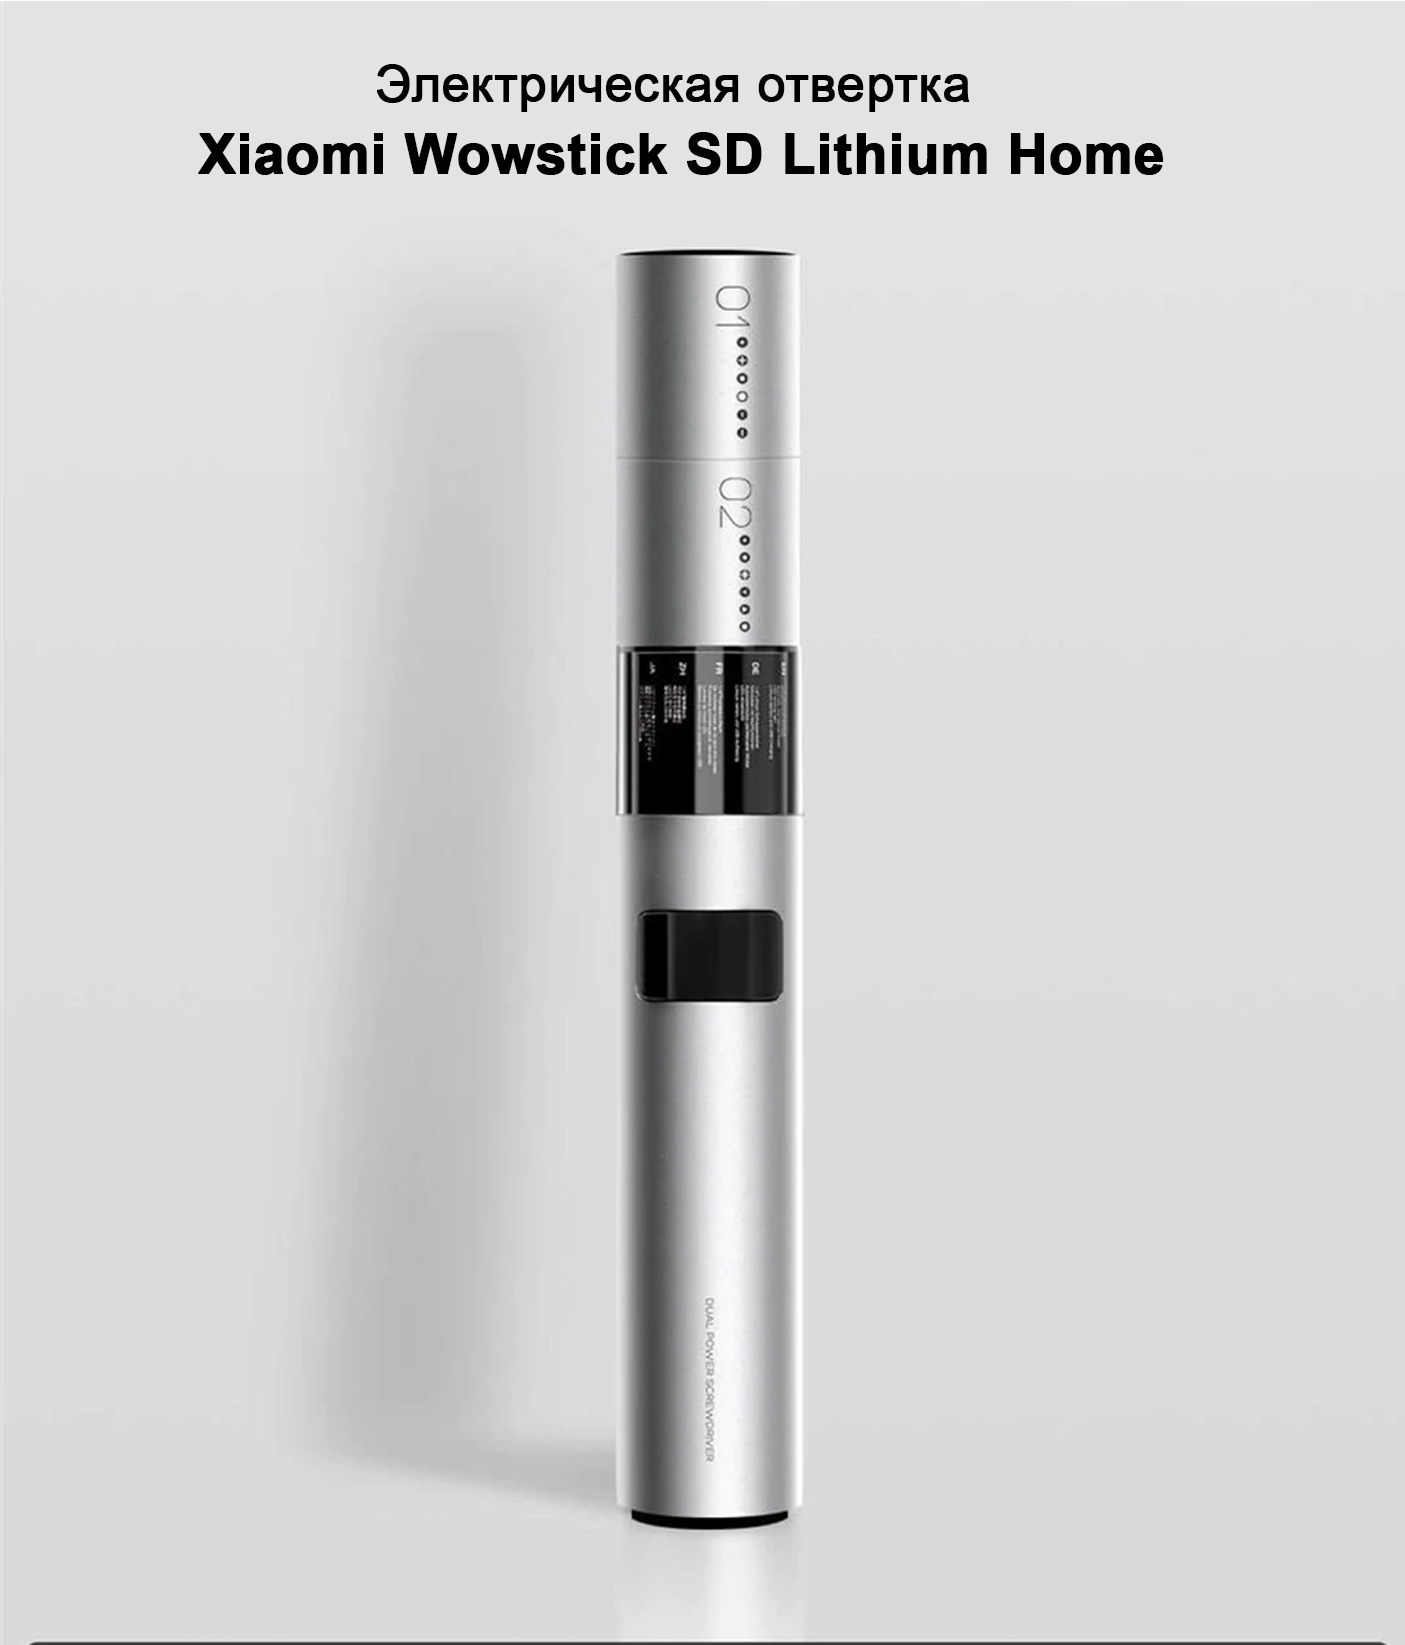 Электрическая отвертка Wowstick SD Lithium Home